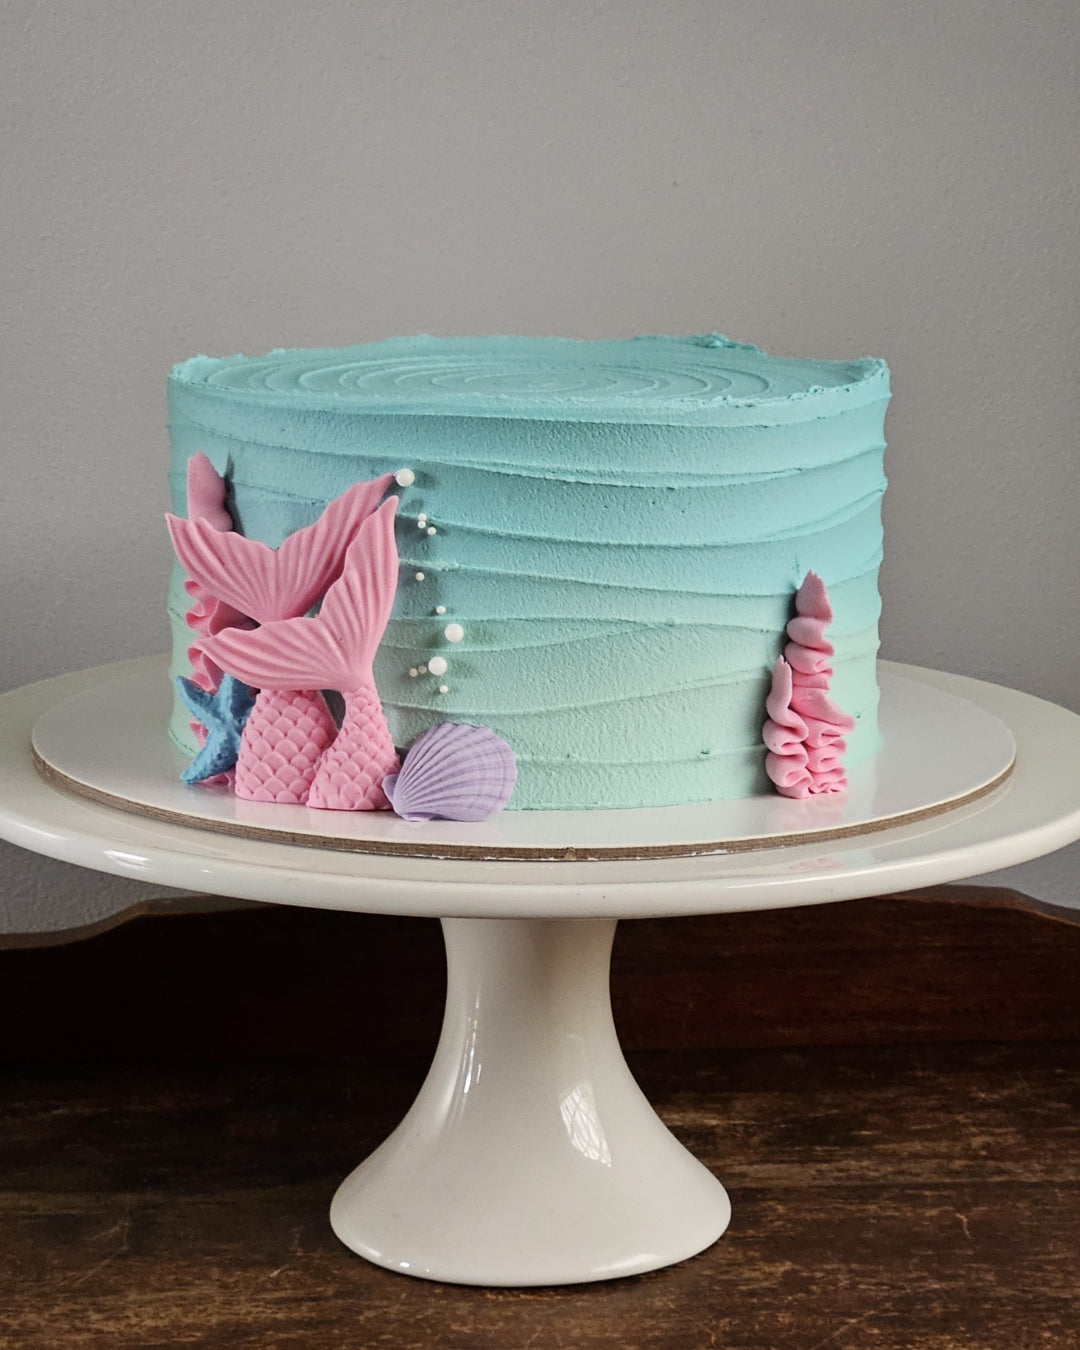 Enchanting Mermaid Cake is a Tasty Riff on 